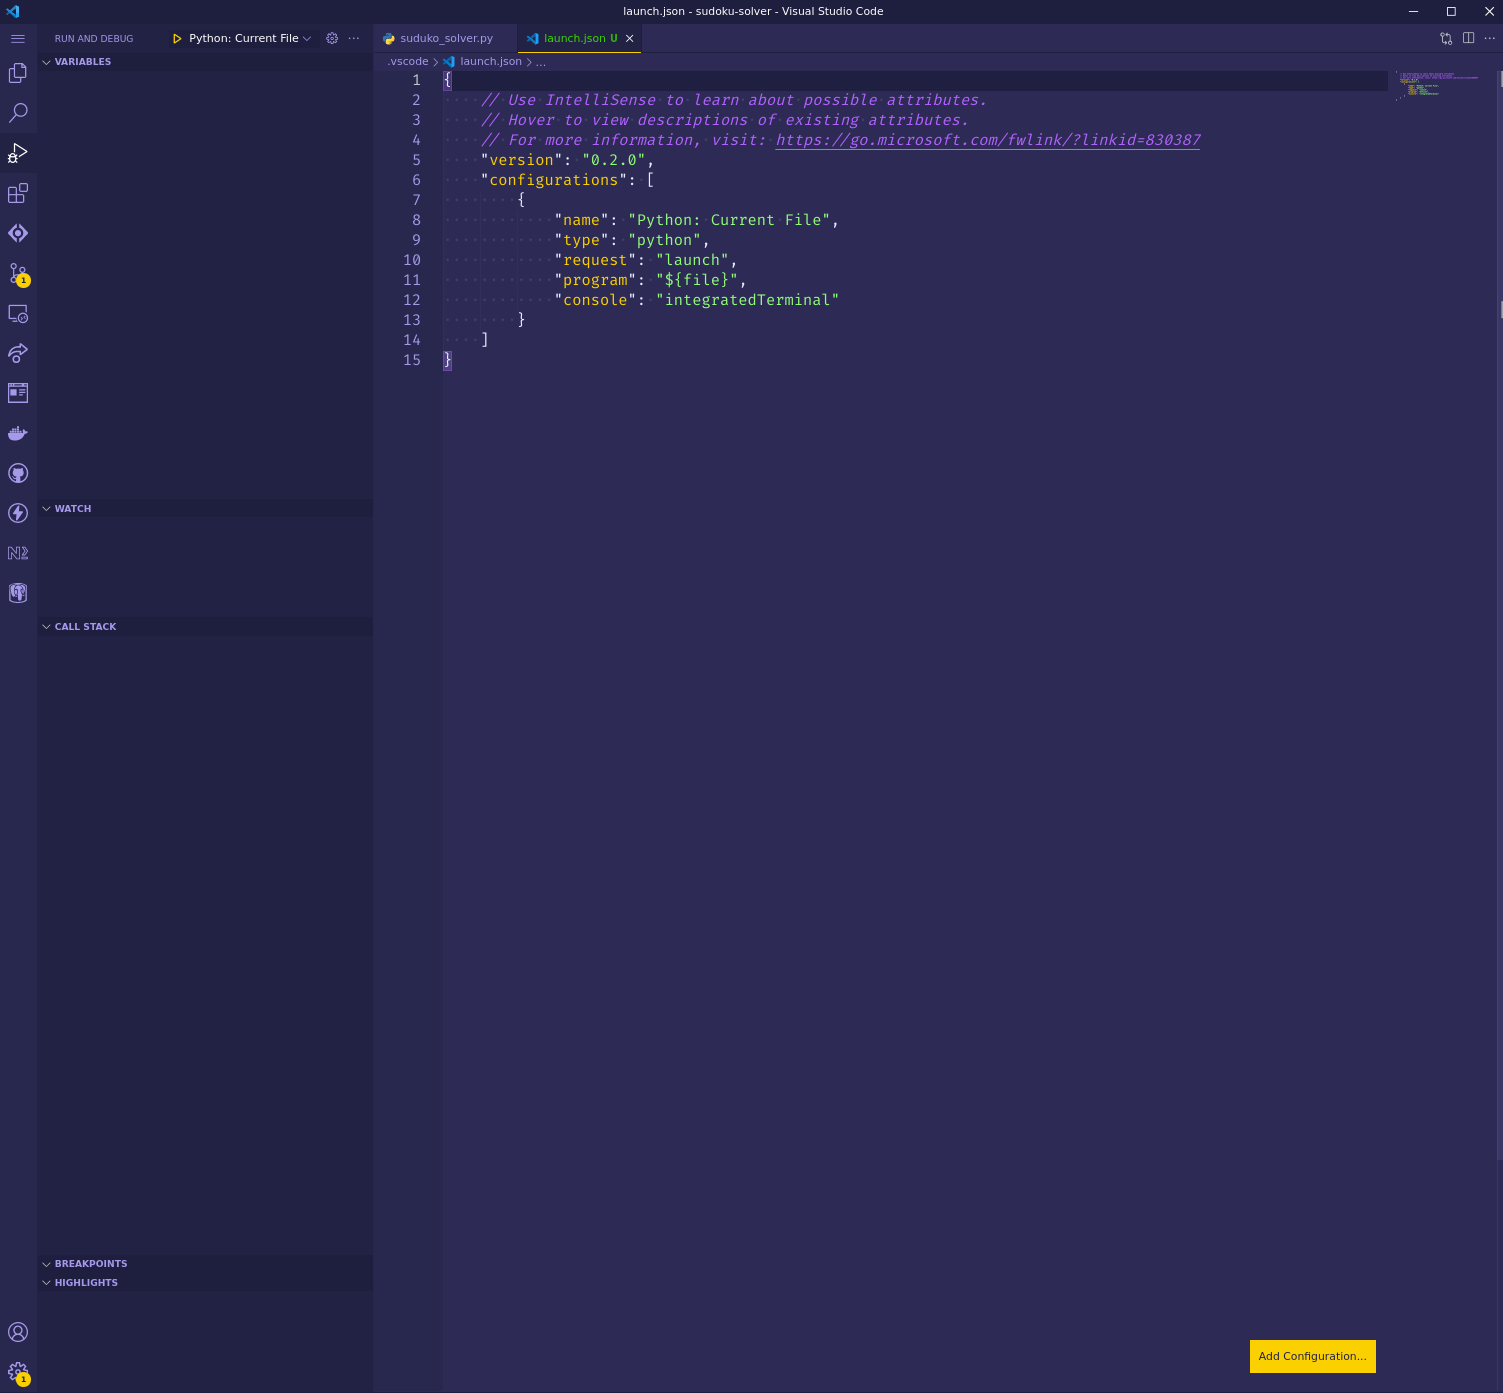 Python Debugger pane in VS Code